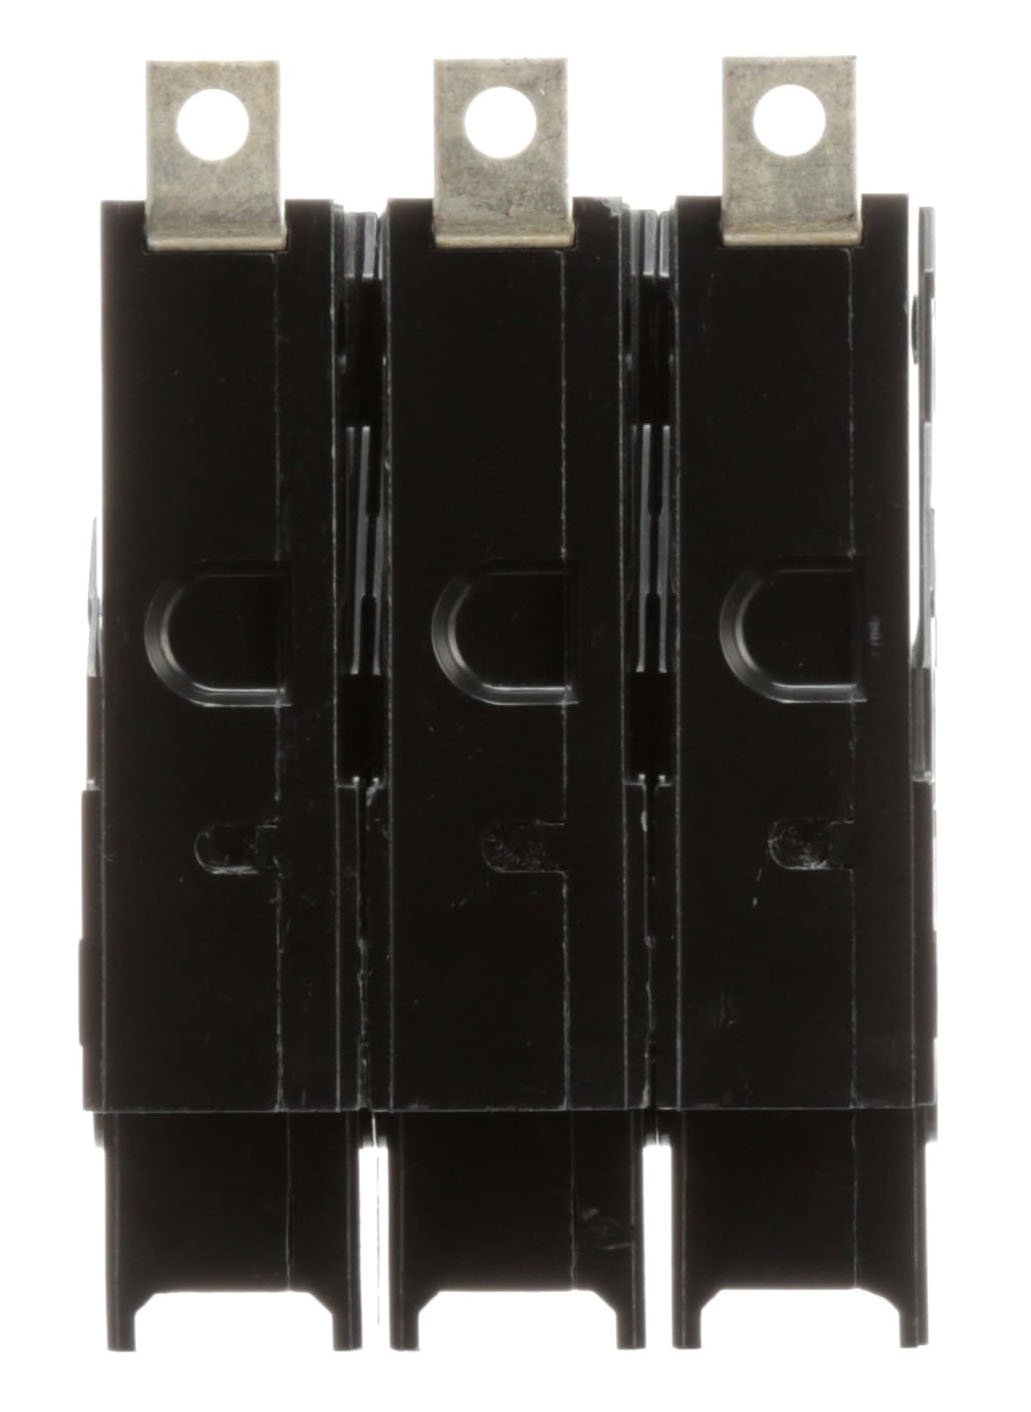 BQD390 - Siemens - 90 Amp Molded Case Circuit Breaker